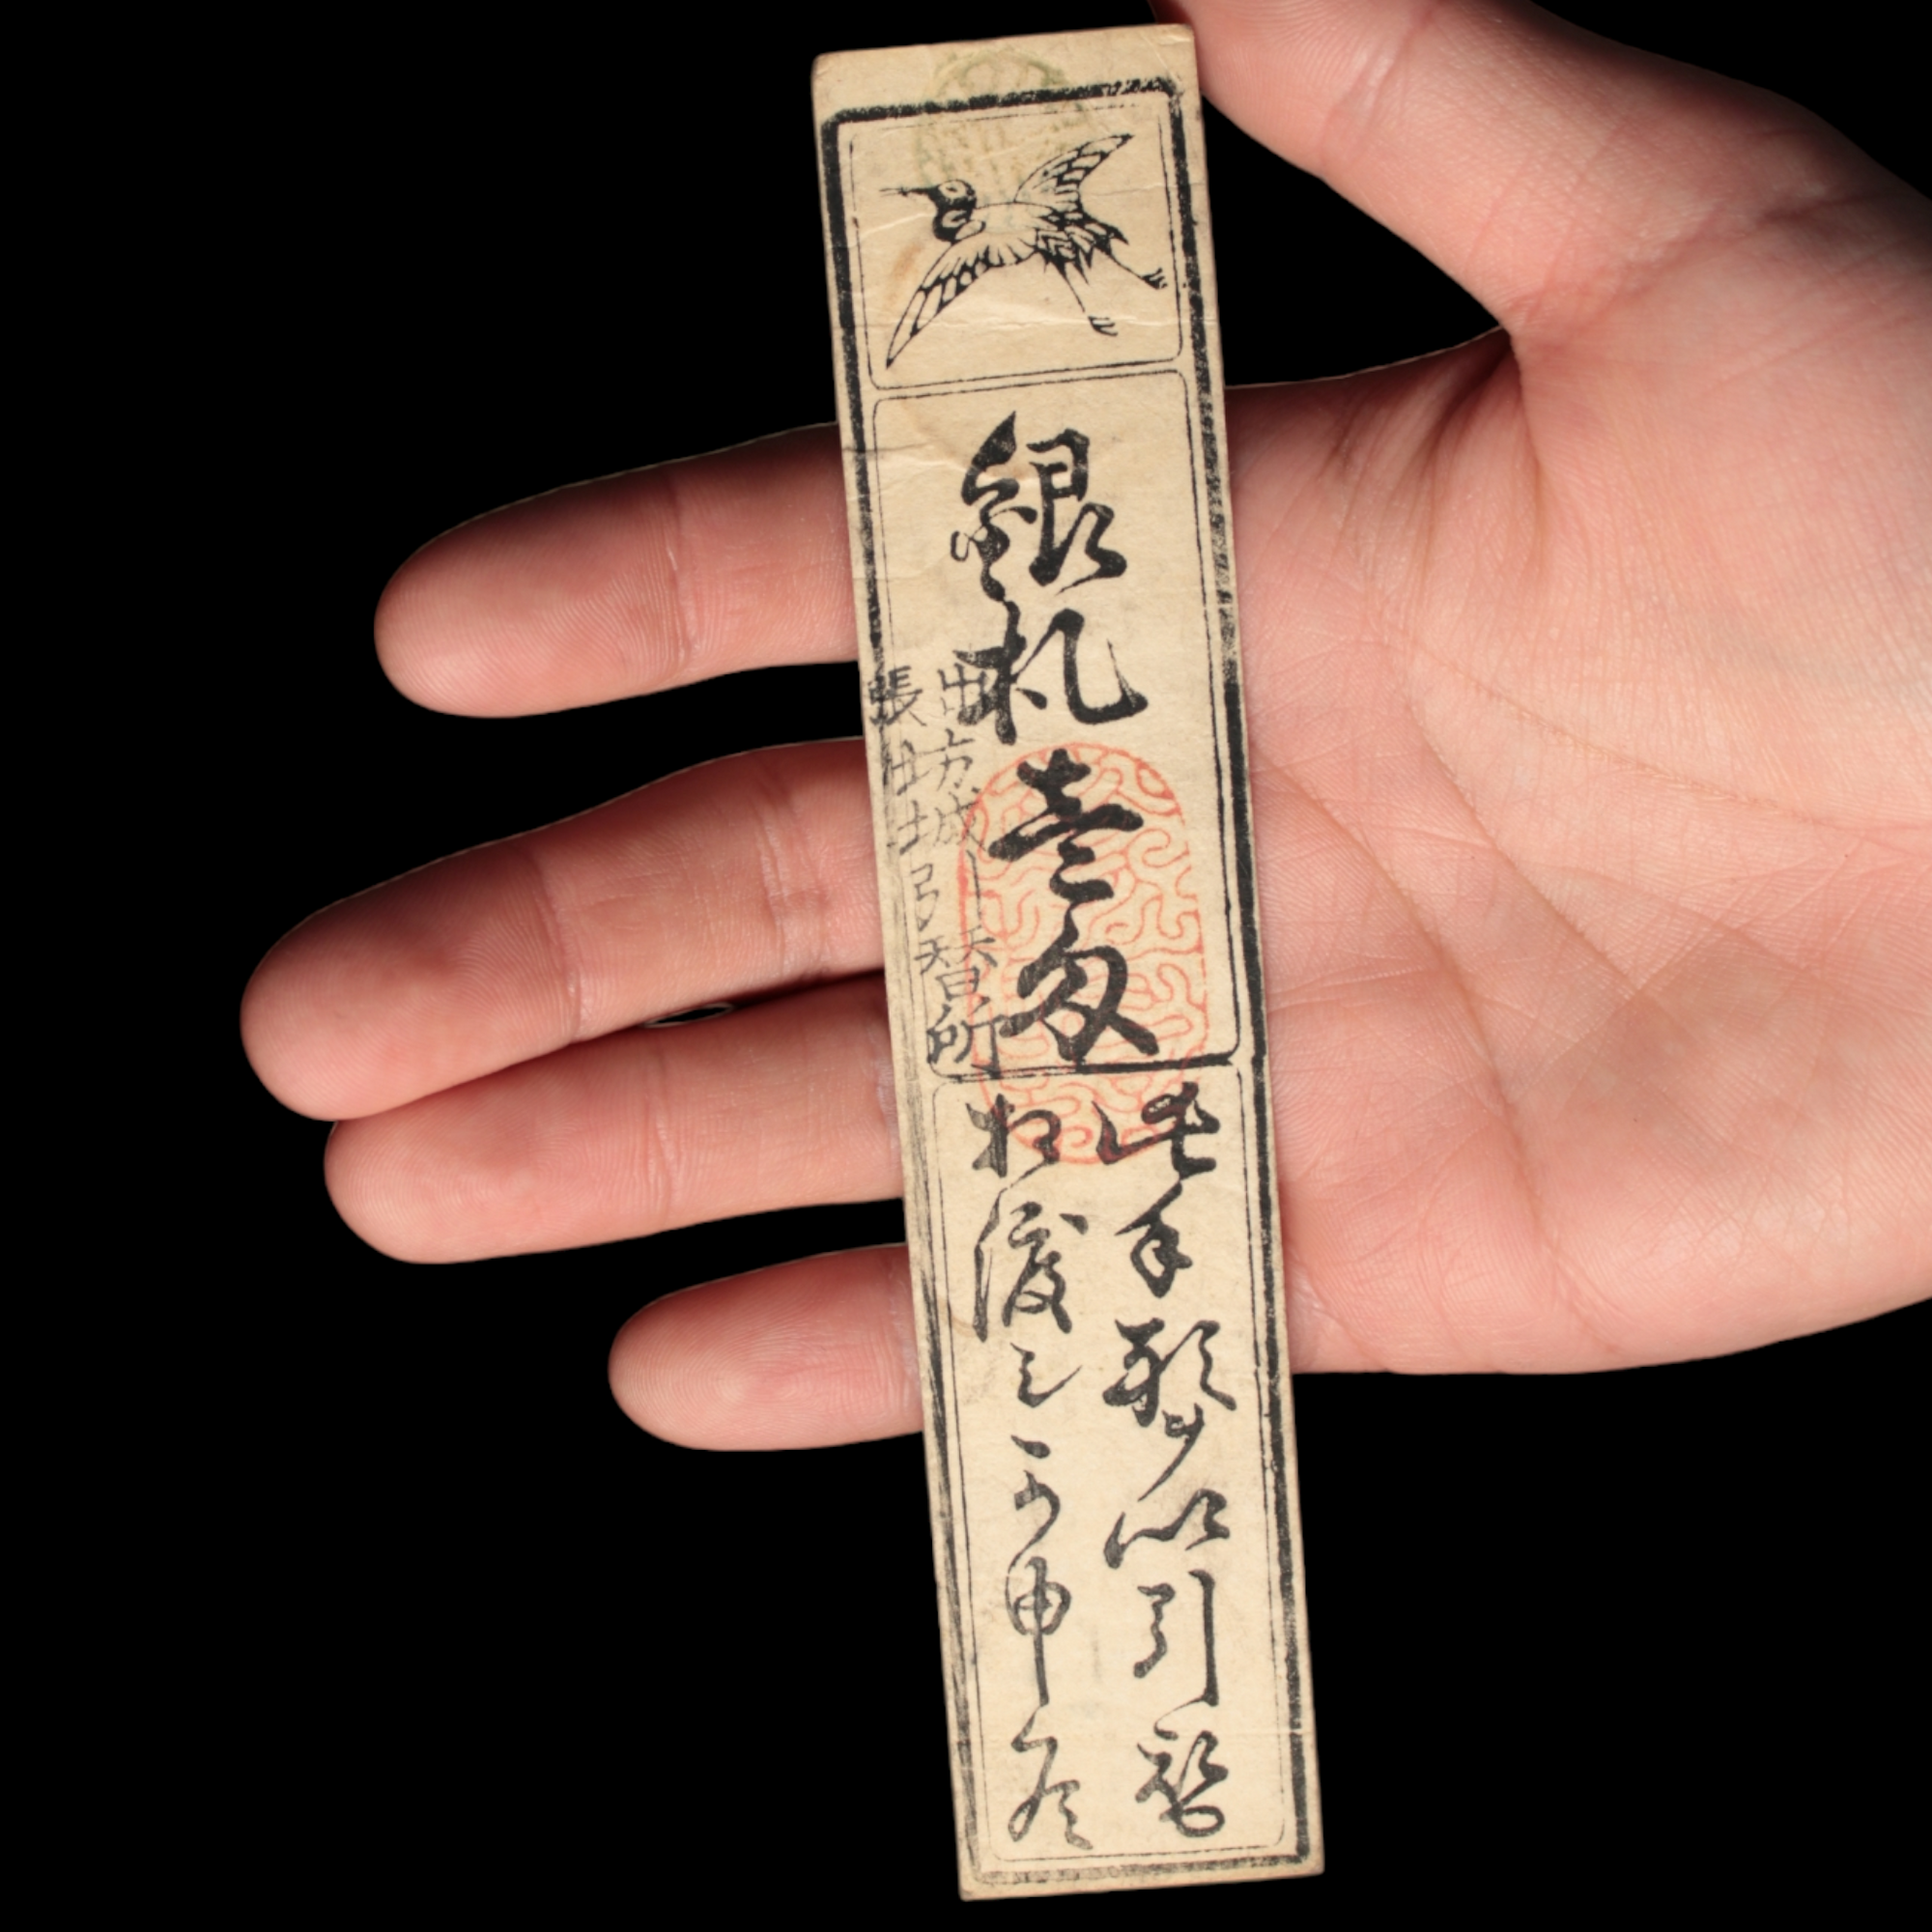 Hansatsu, Silver 1 Monme, Kinai Region - Undated (1800's) - Edo Japan - 4/12/23 Auction